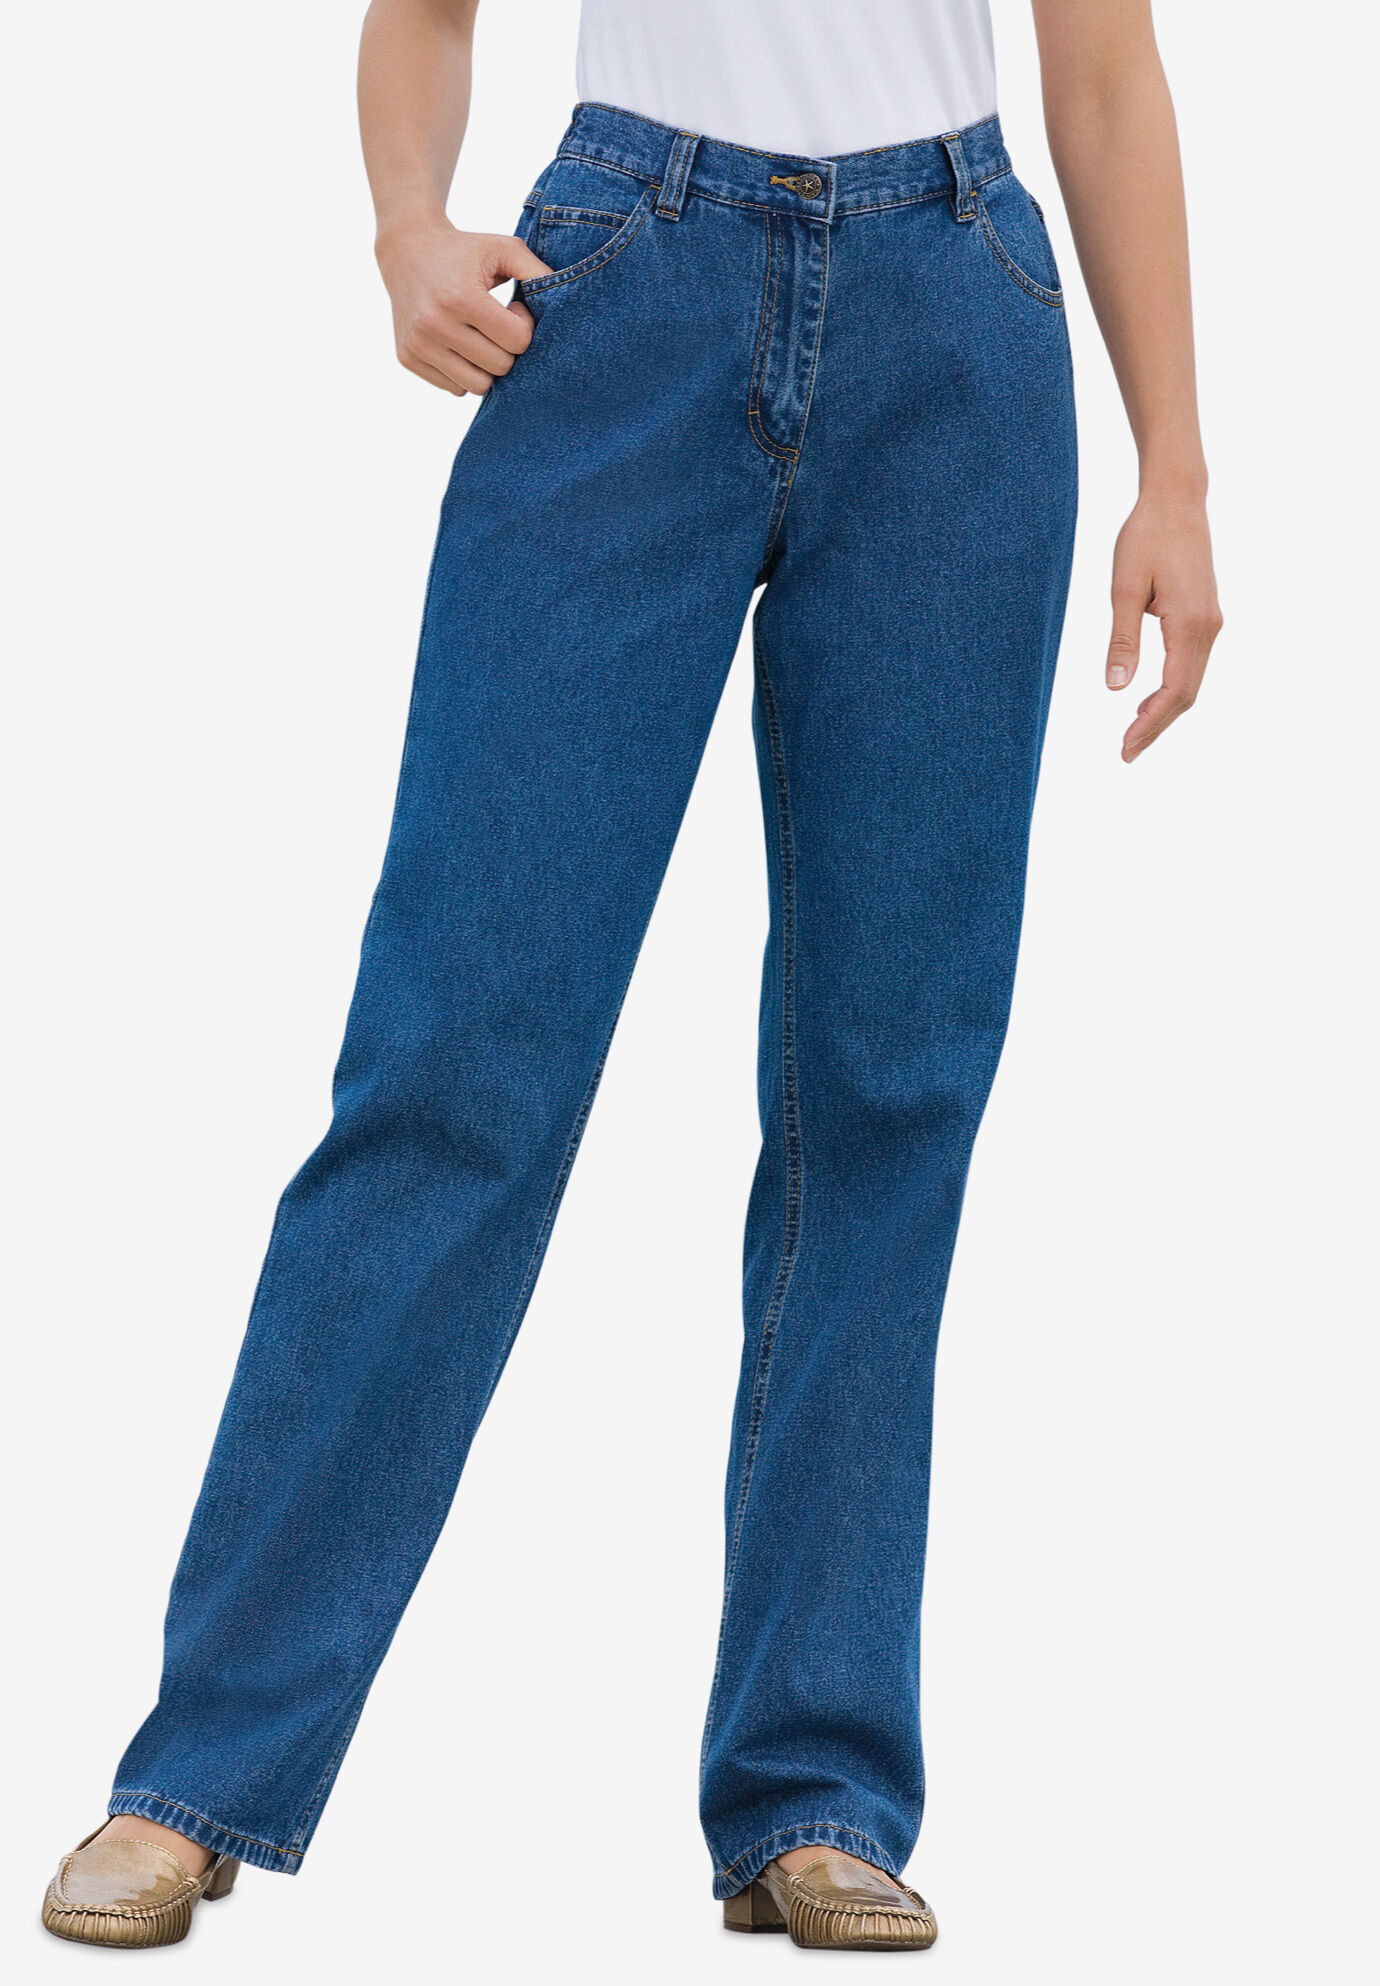 Denim Men Kids 6 Pocket Half Elastic Waist Jeans (26-36) (38-40), Zipper,  Age Group: 4-16 at Rs 170/piece in Kolkata